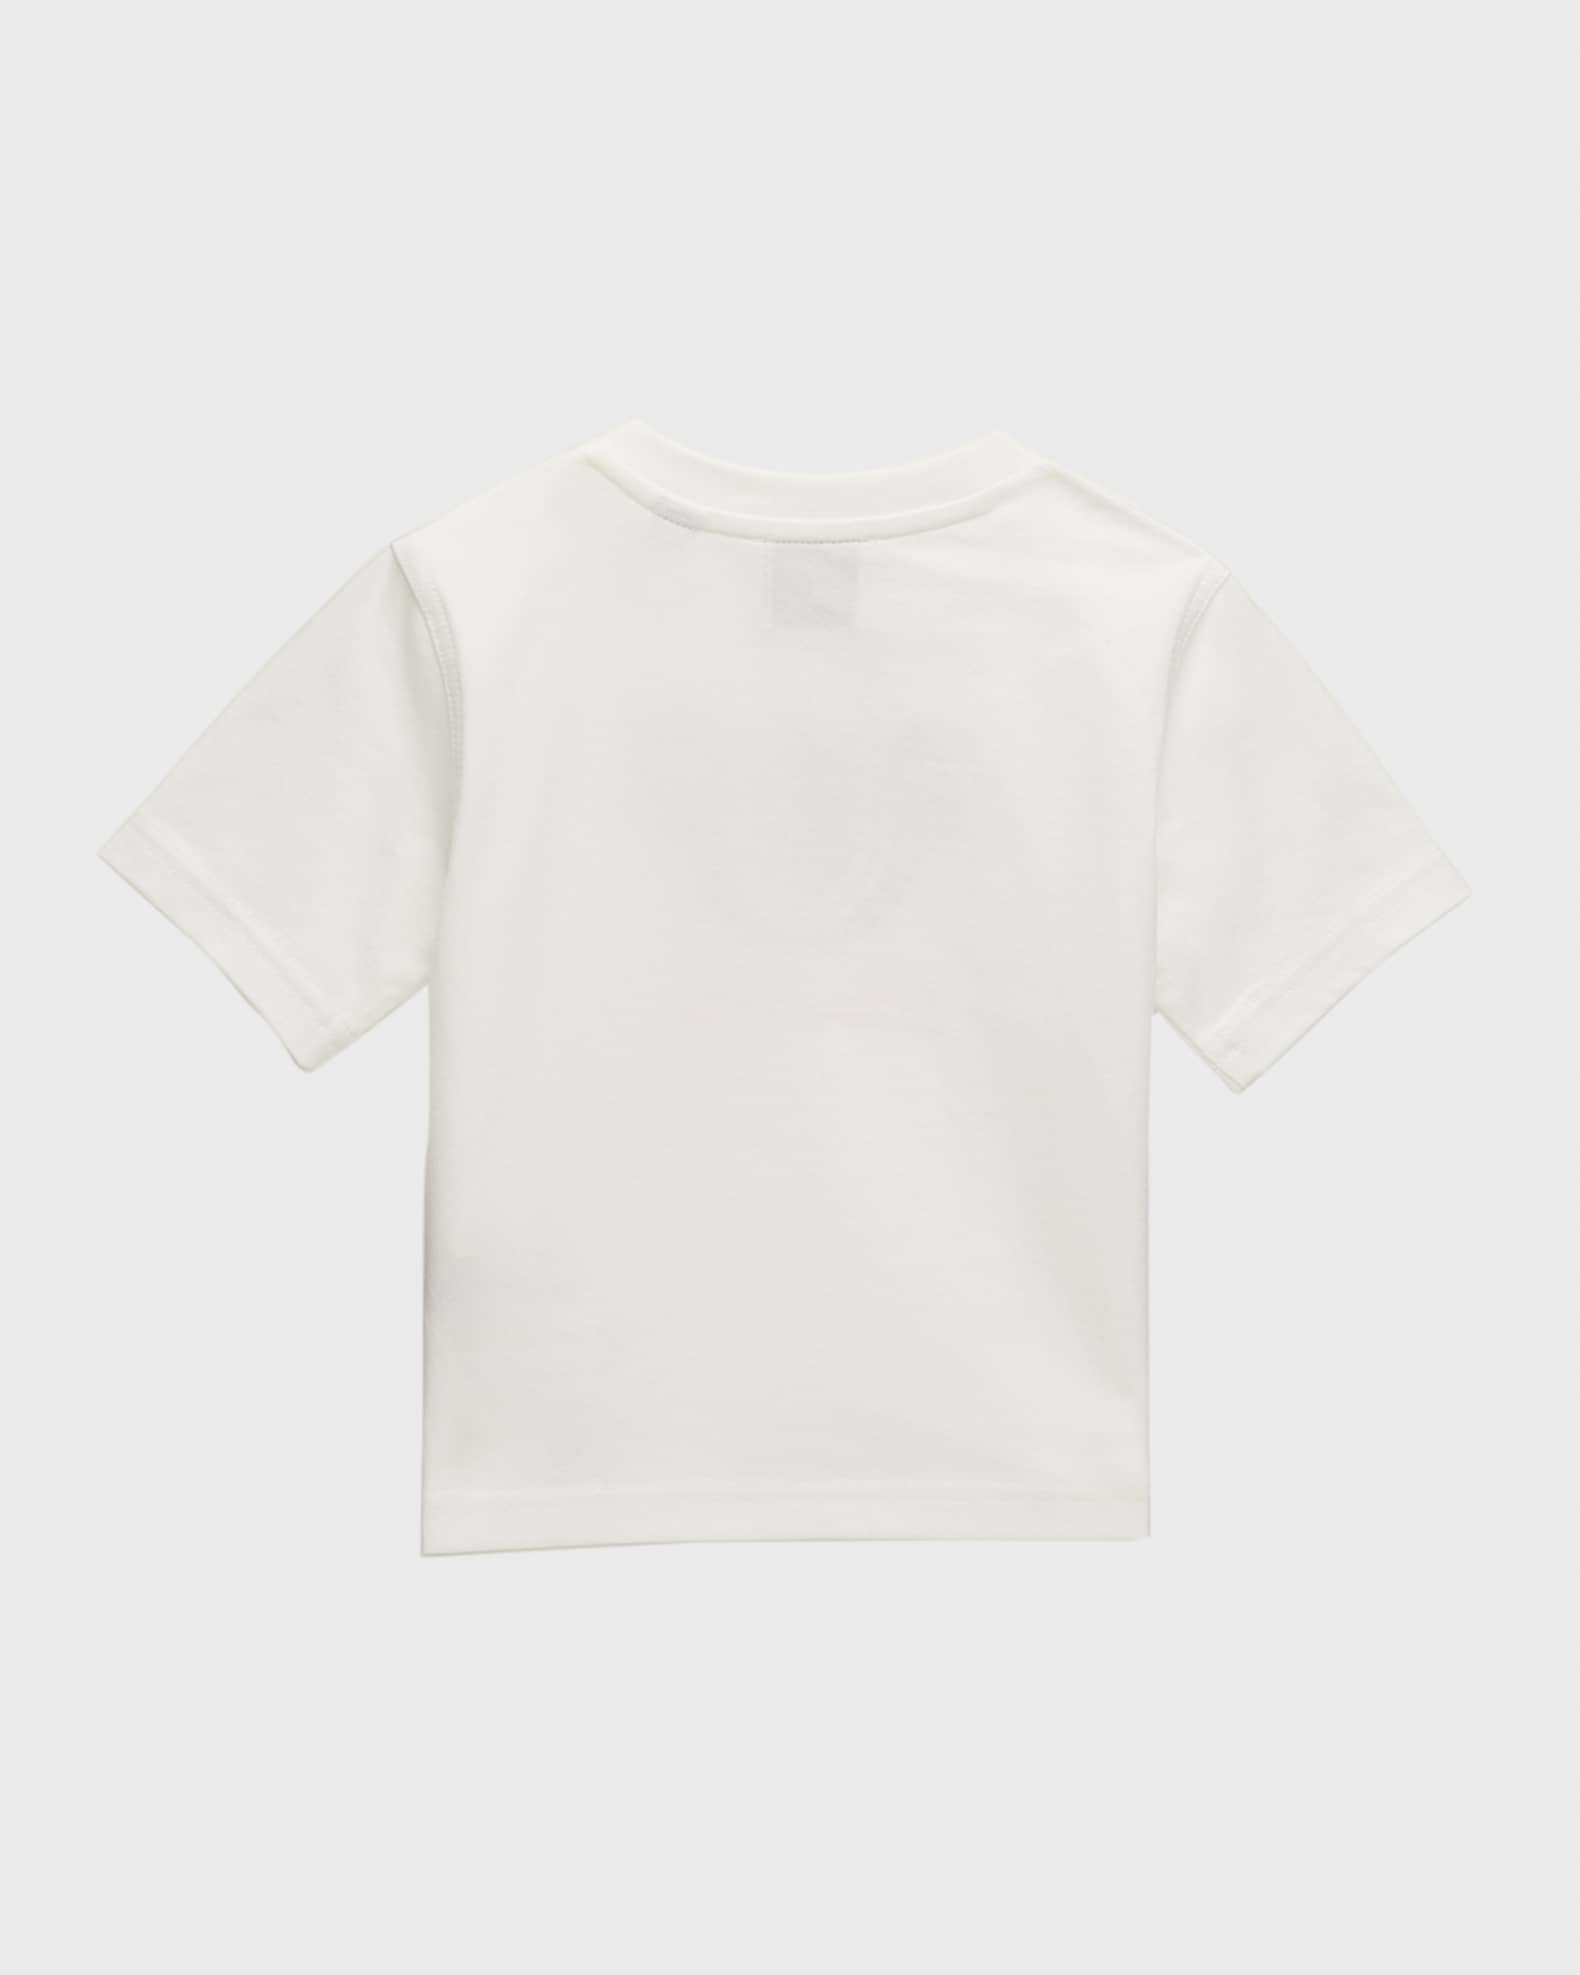 Burberry Kid's Roscoe Teddy Bear-Print T-Shirt, Size 6M-2 | Neiman Marcus